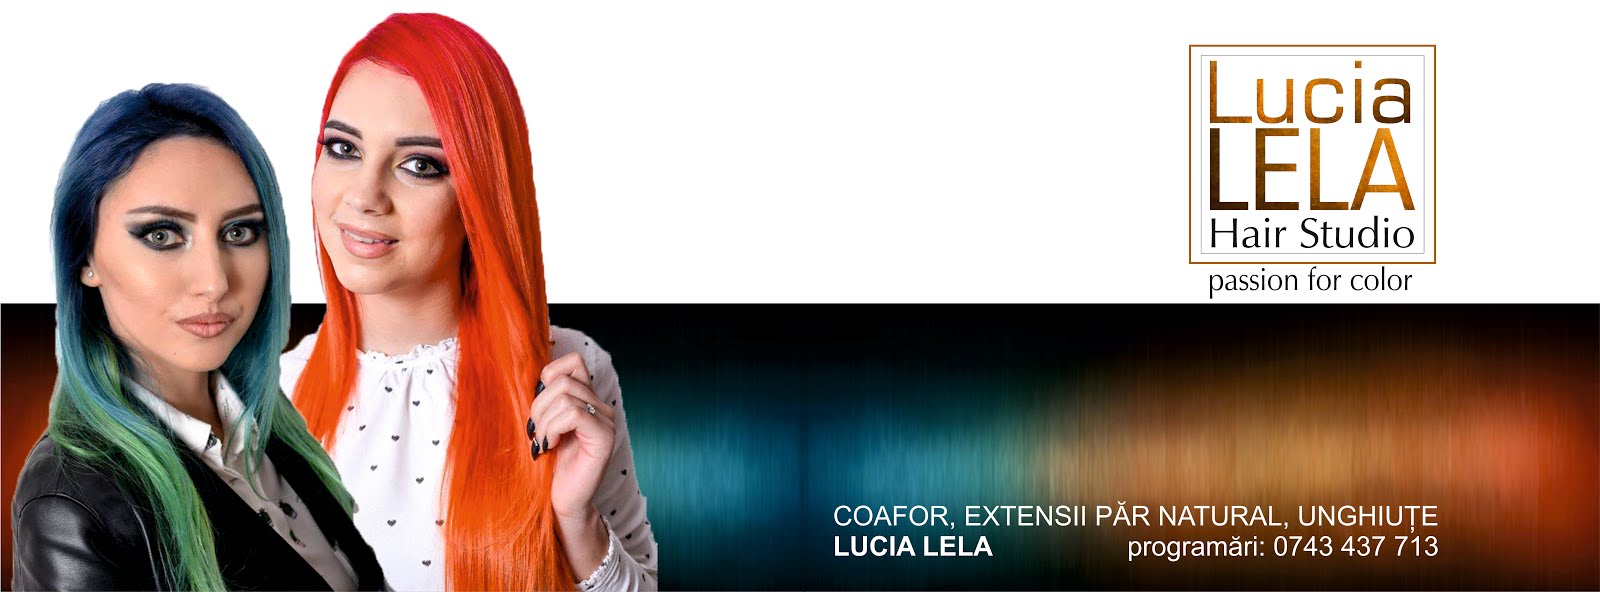 Lucia Lela Hair Studio